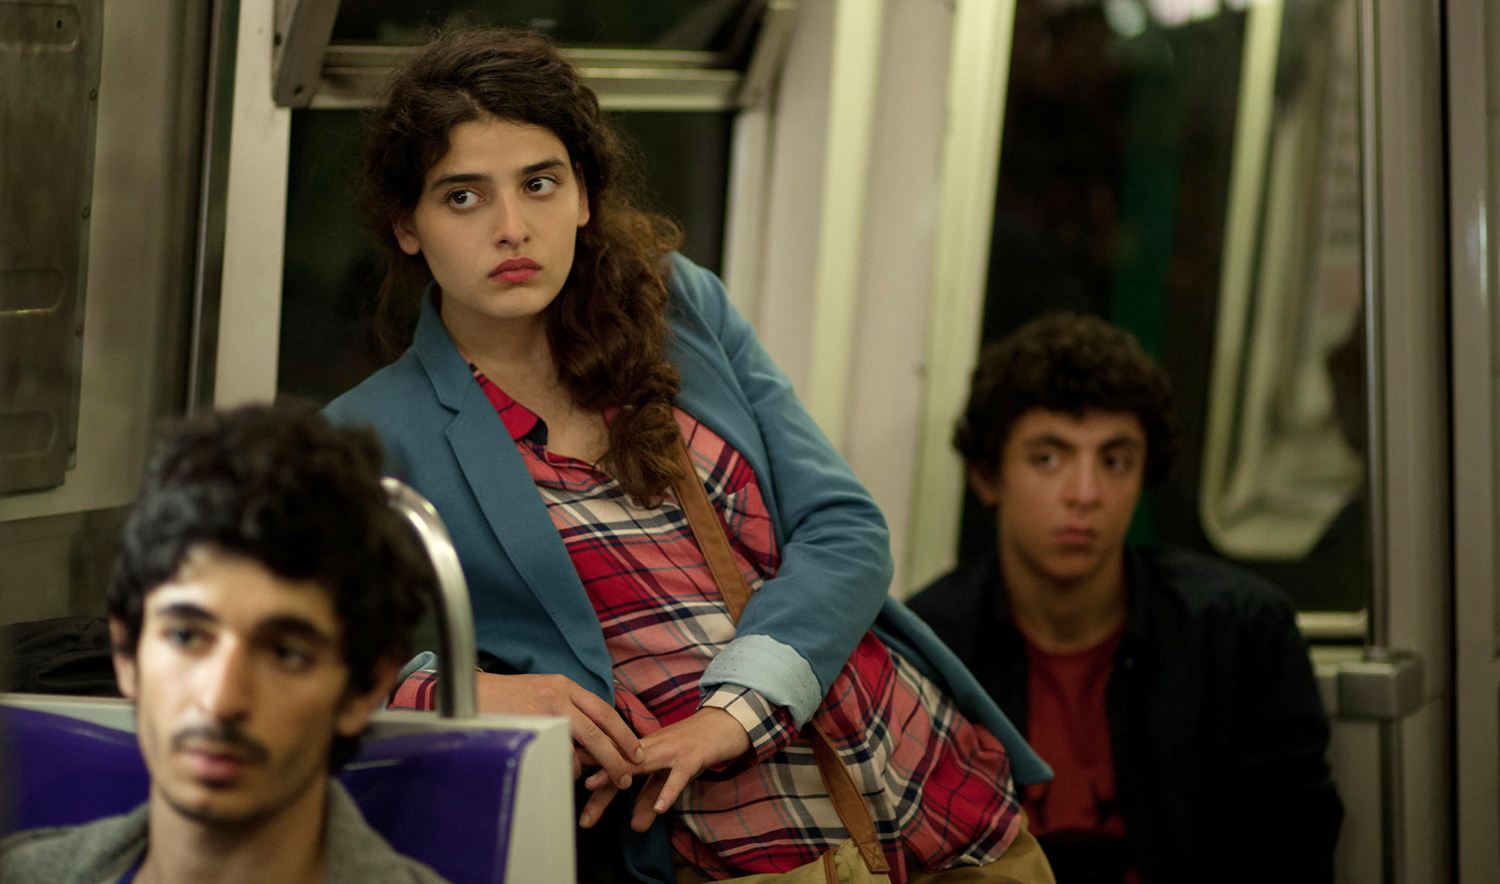 on subway, film still from nocturama